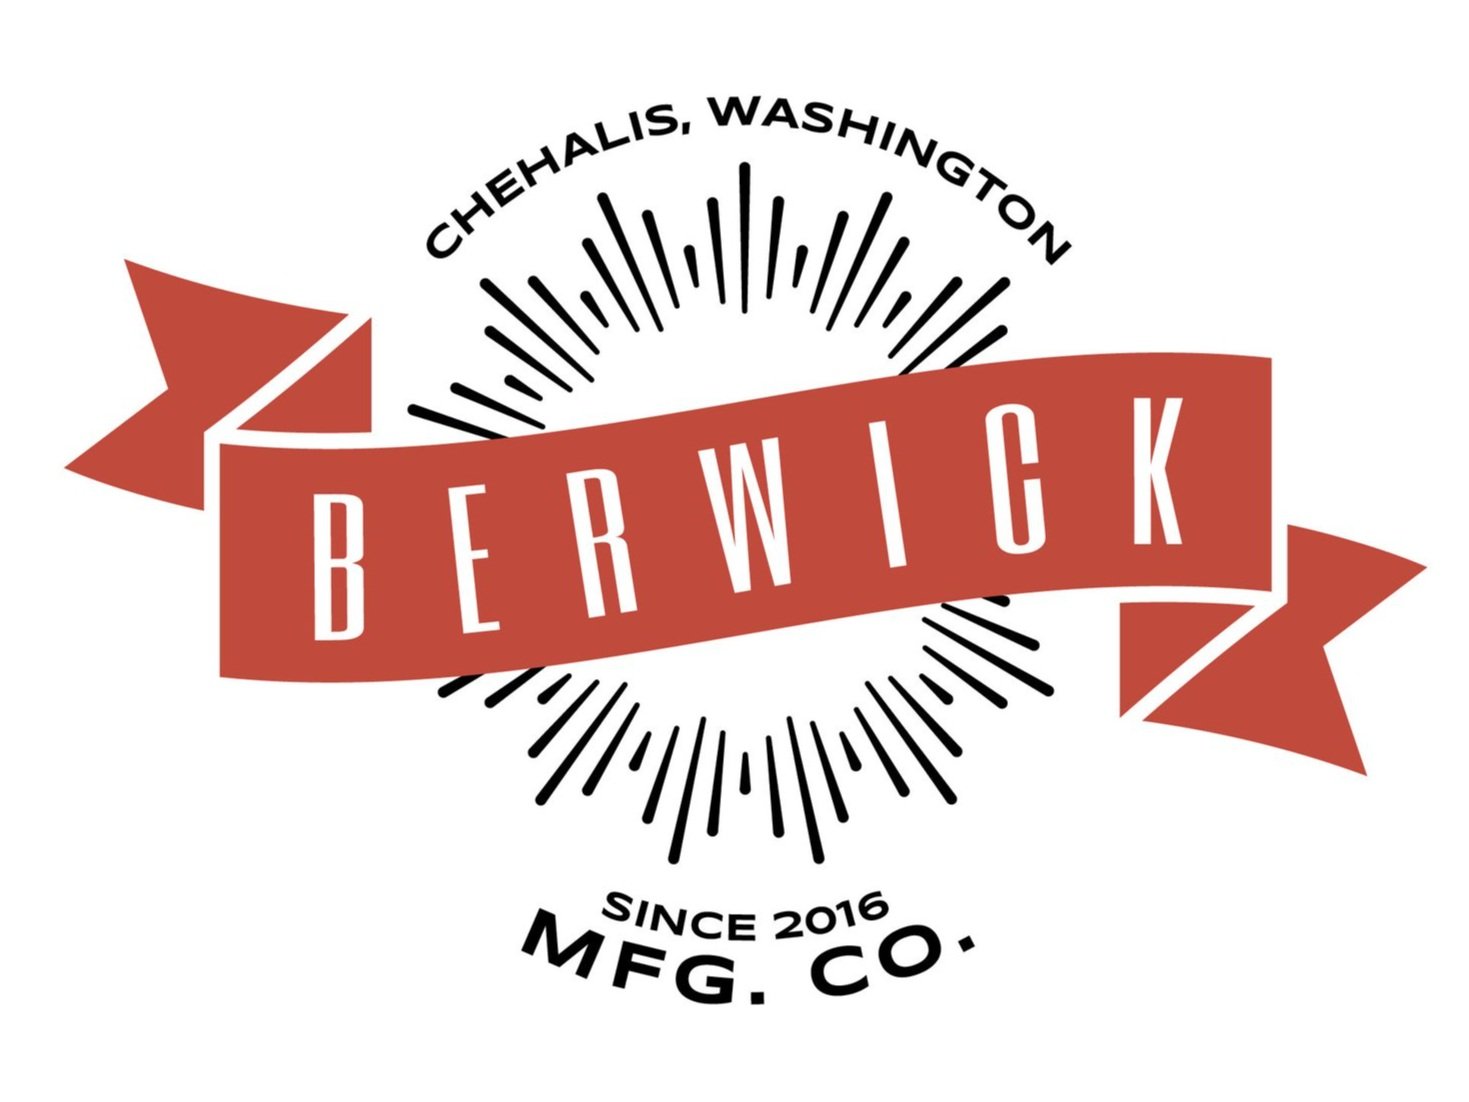 Berwick Customs